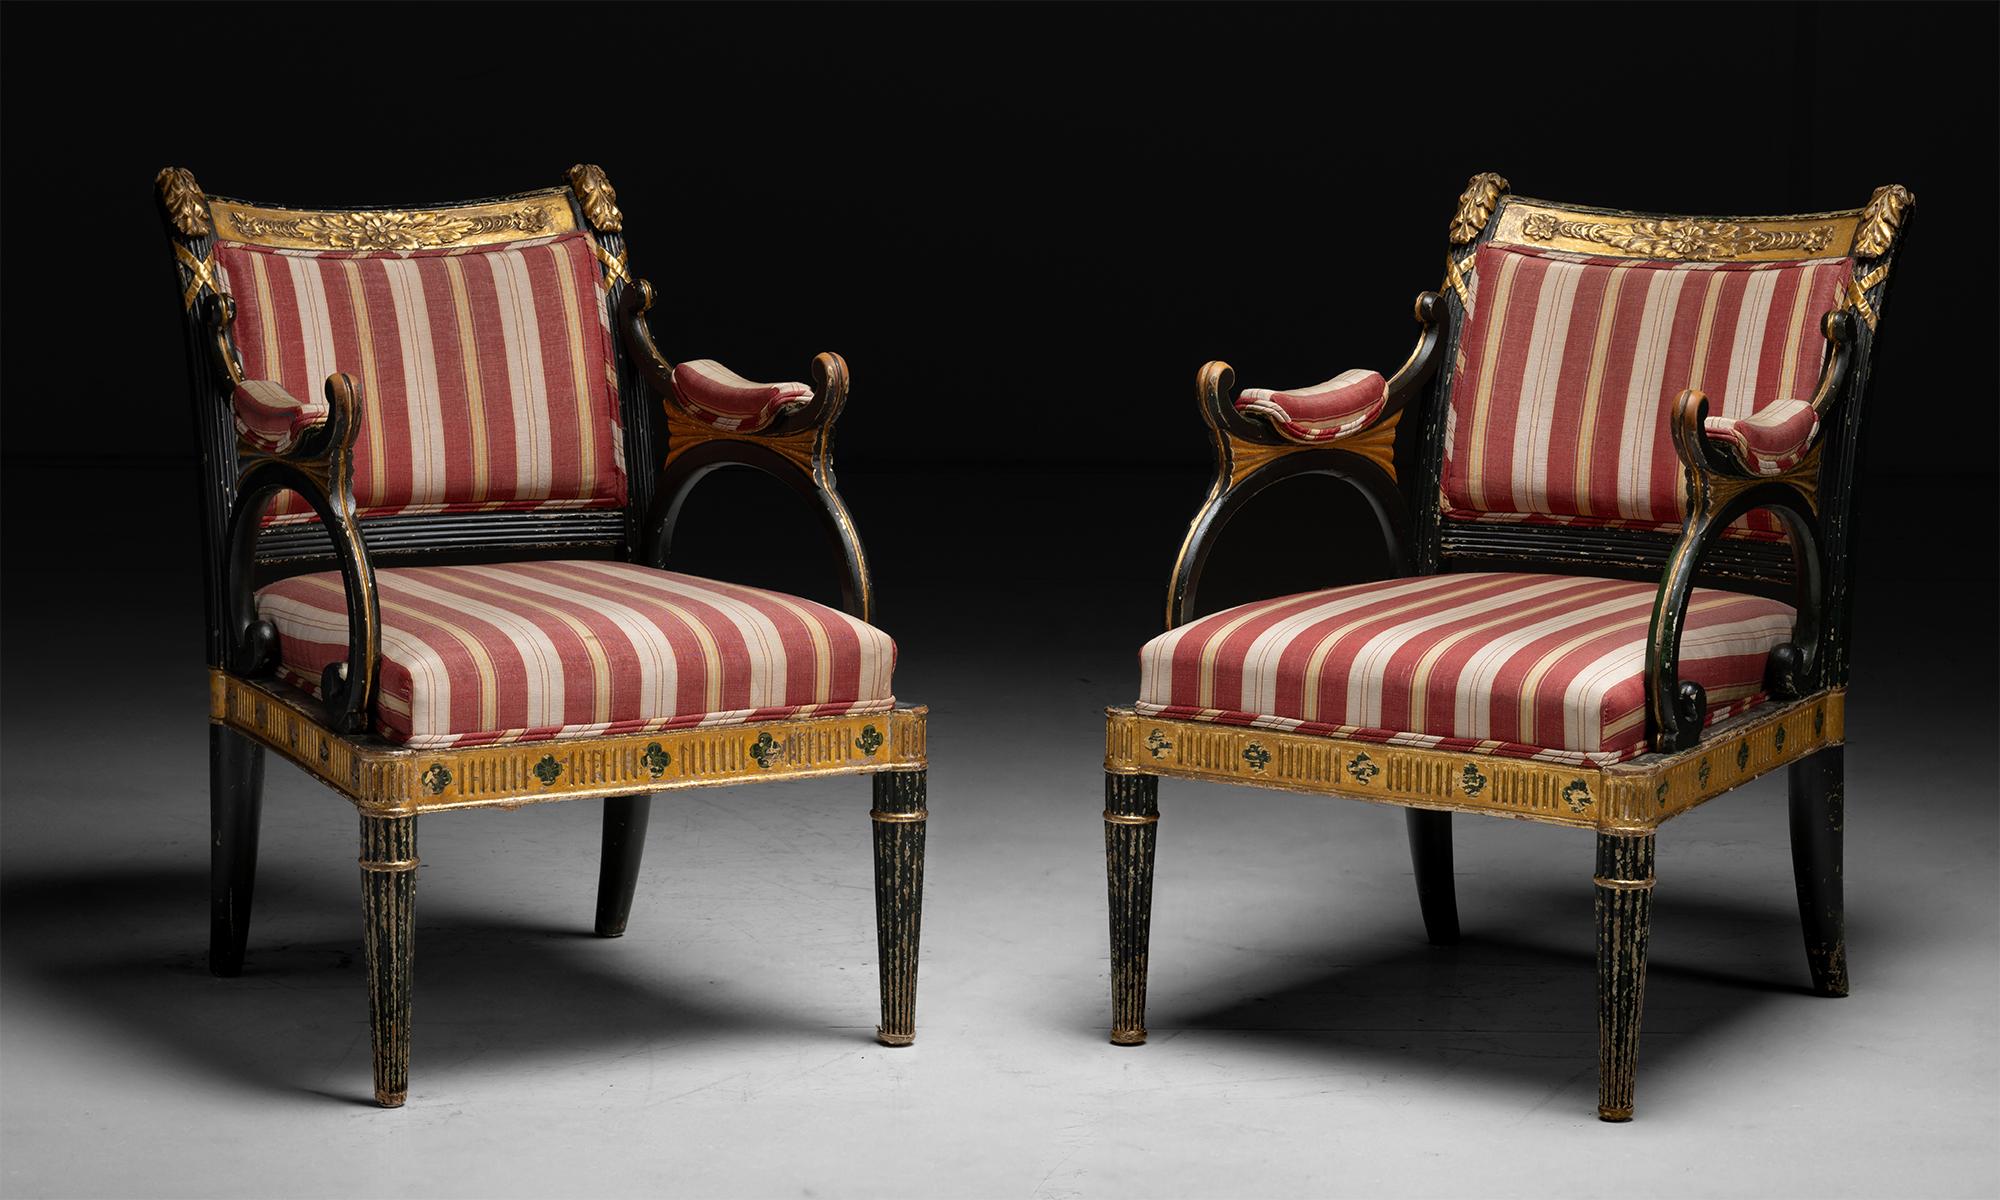 Regency-Sessel

England um 1830

Vergoldete Sessel mit detaillierter Schnitzerei, original gepolstert.

24 